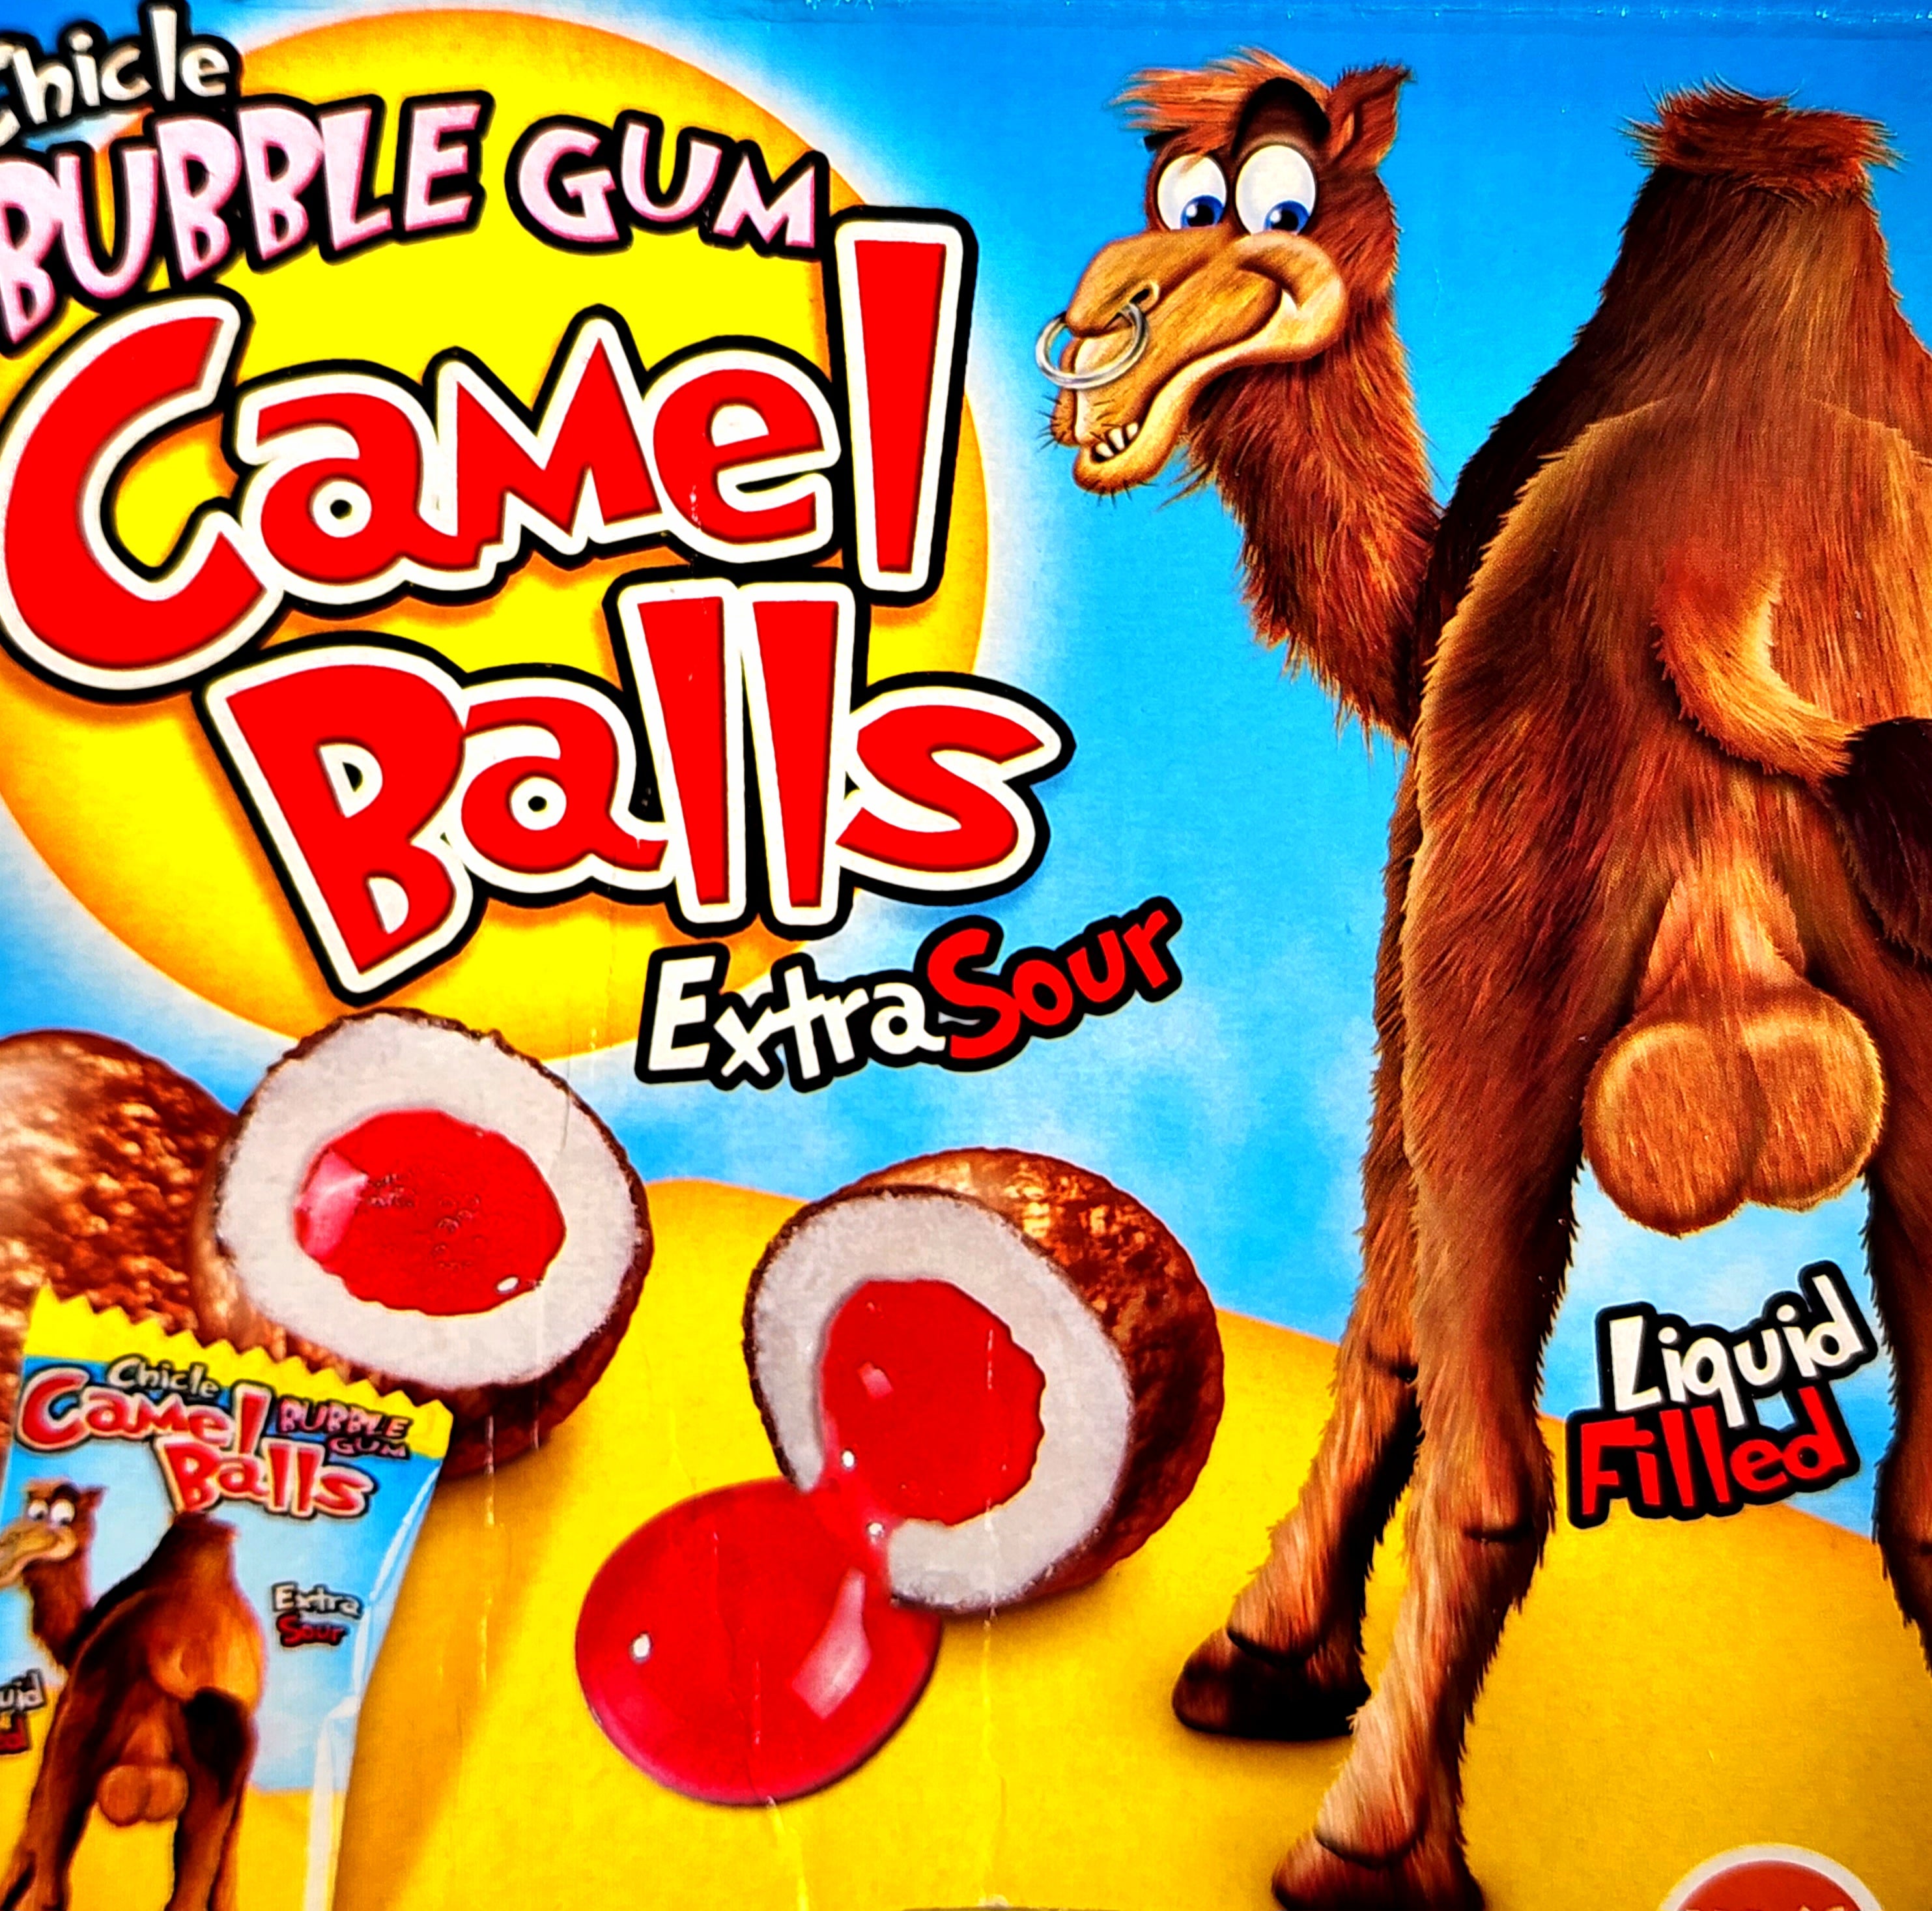 Camel Balls Bubble Gum - Bag of 5 - Pik n Mix Lollies NZ